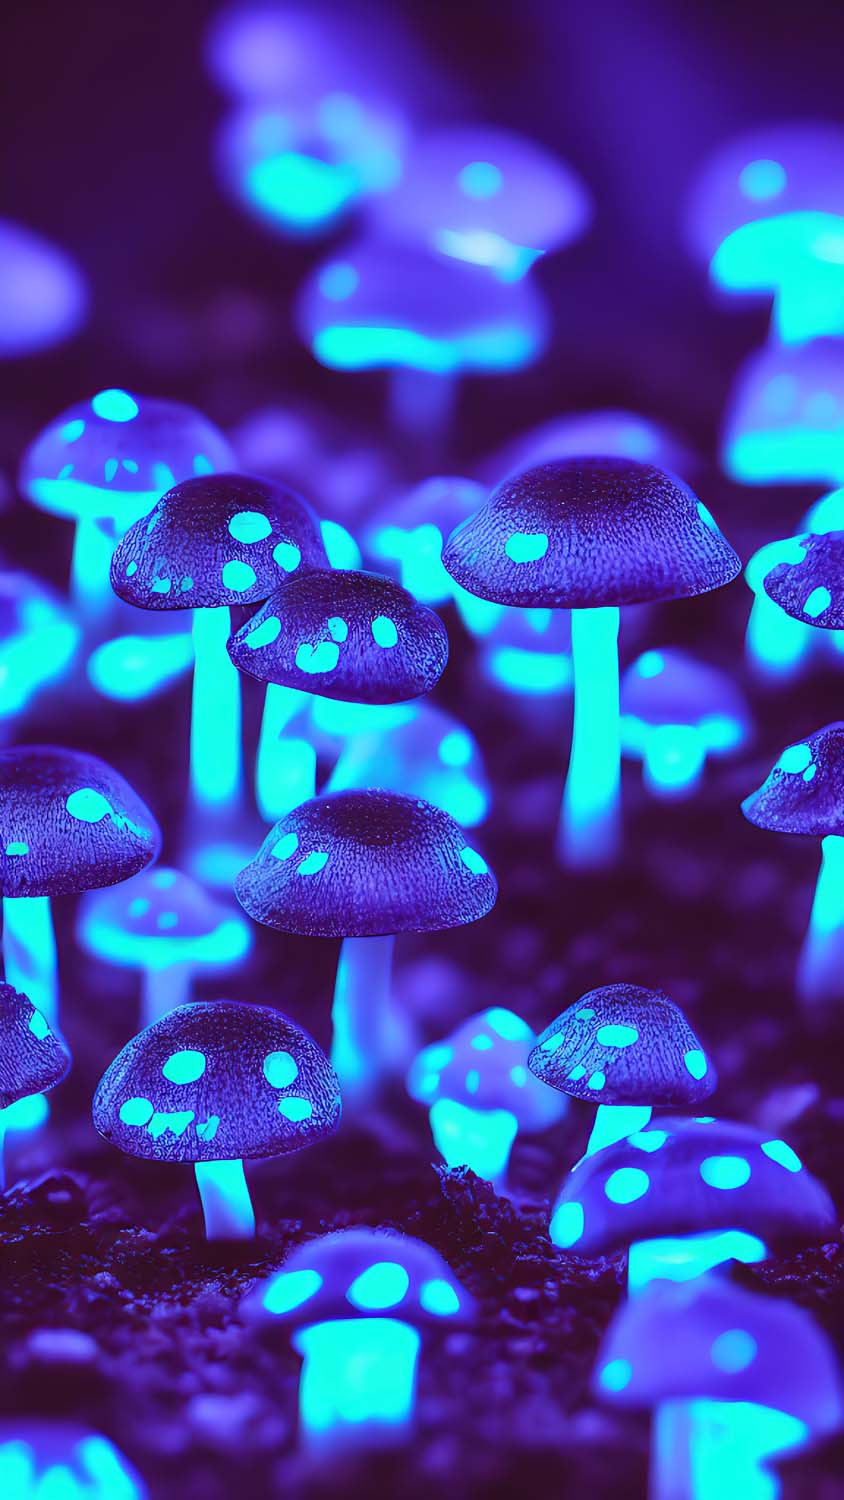 Glowing Mushrooms IPhone Wallpaper HD  IPhone Wallpapers